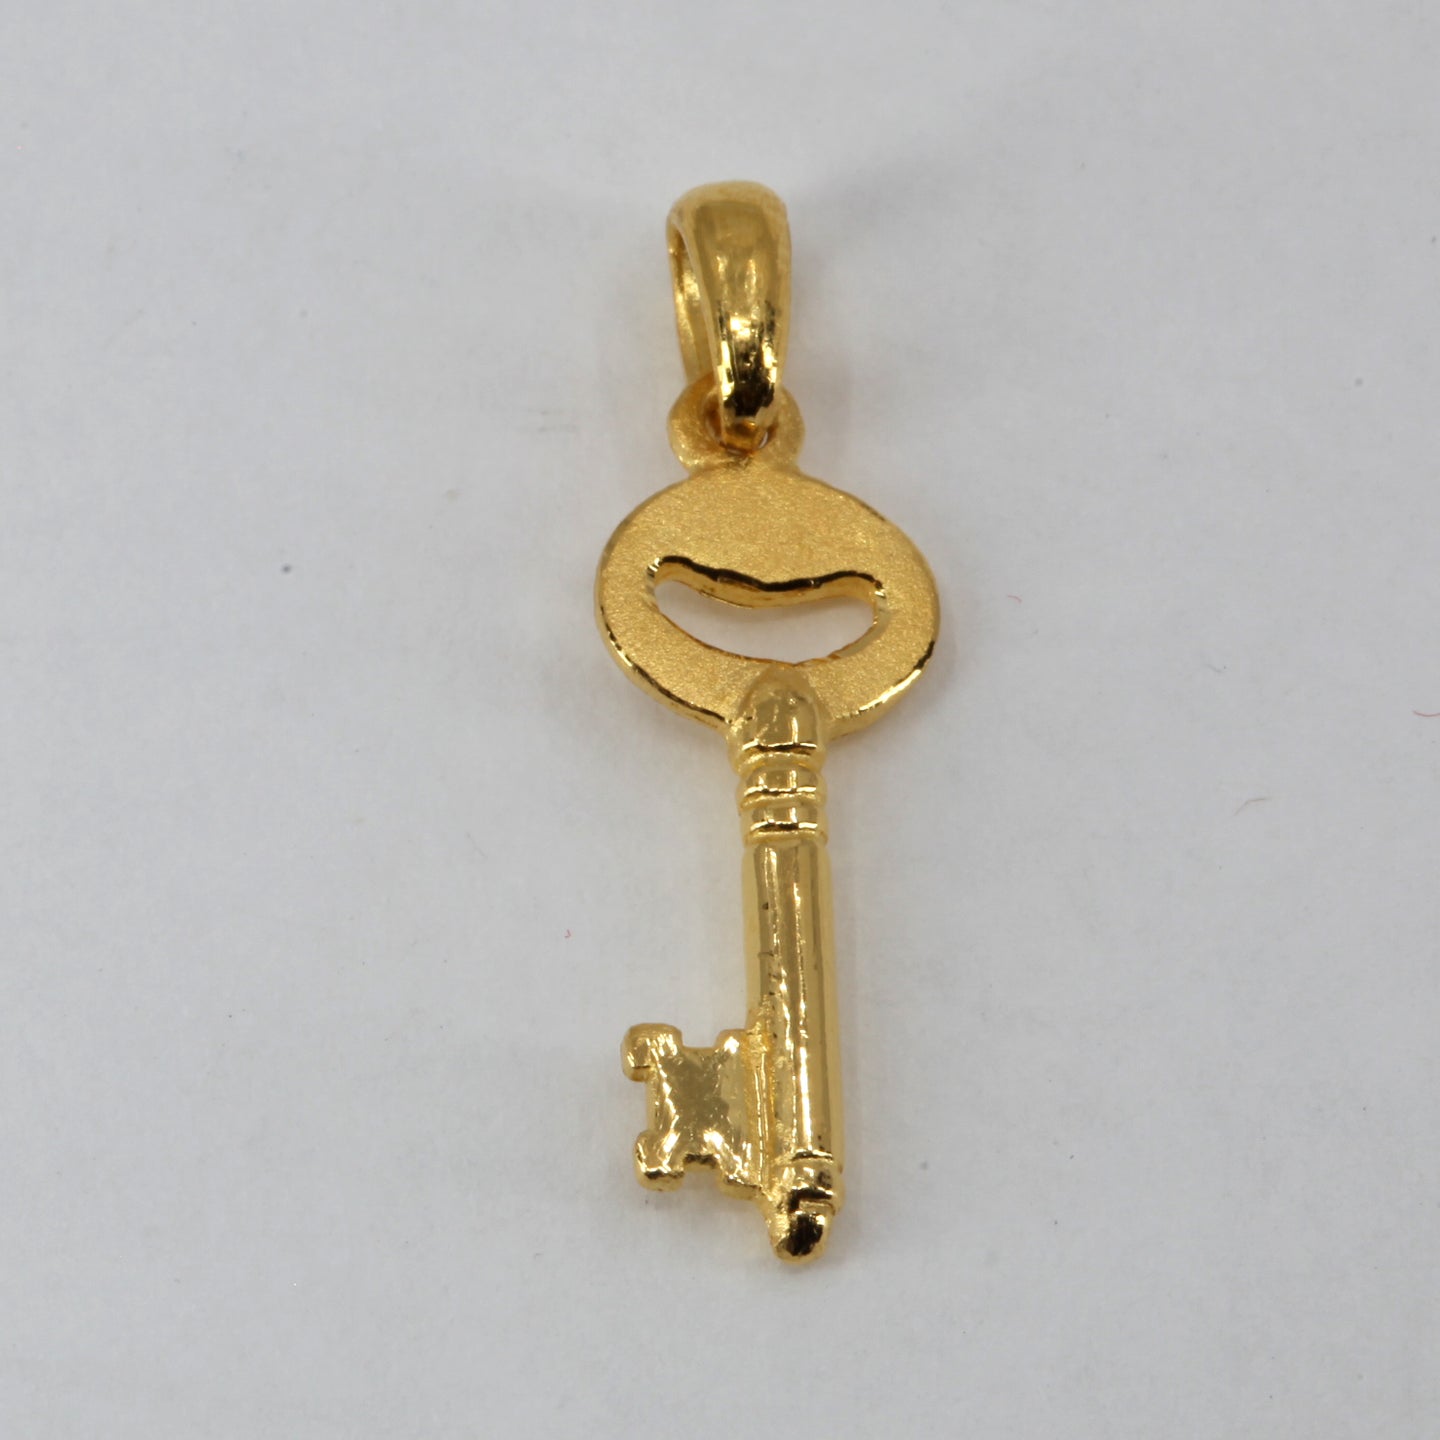 24K Solid Yellow Gold Key Pendant Charm 2.3 Grams